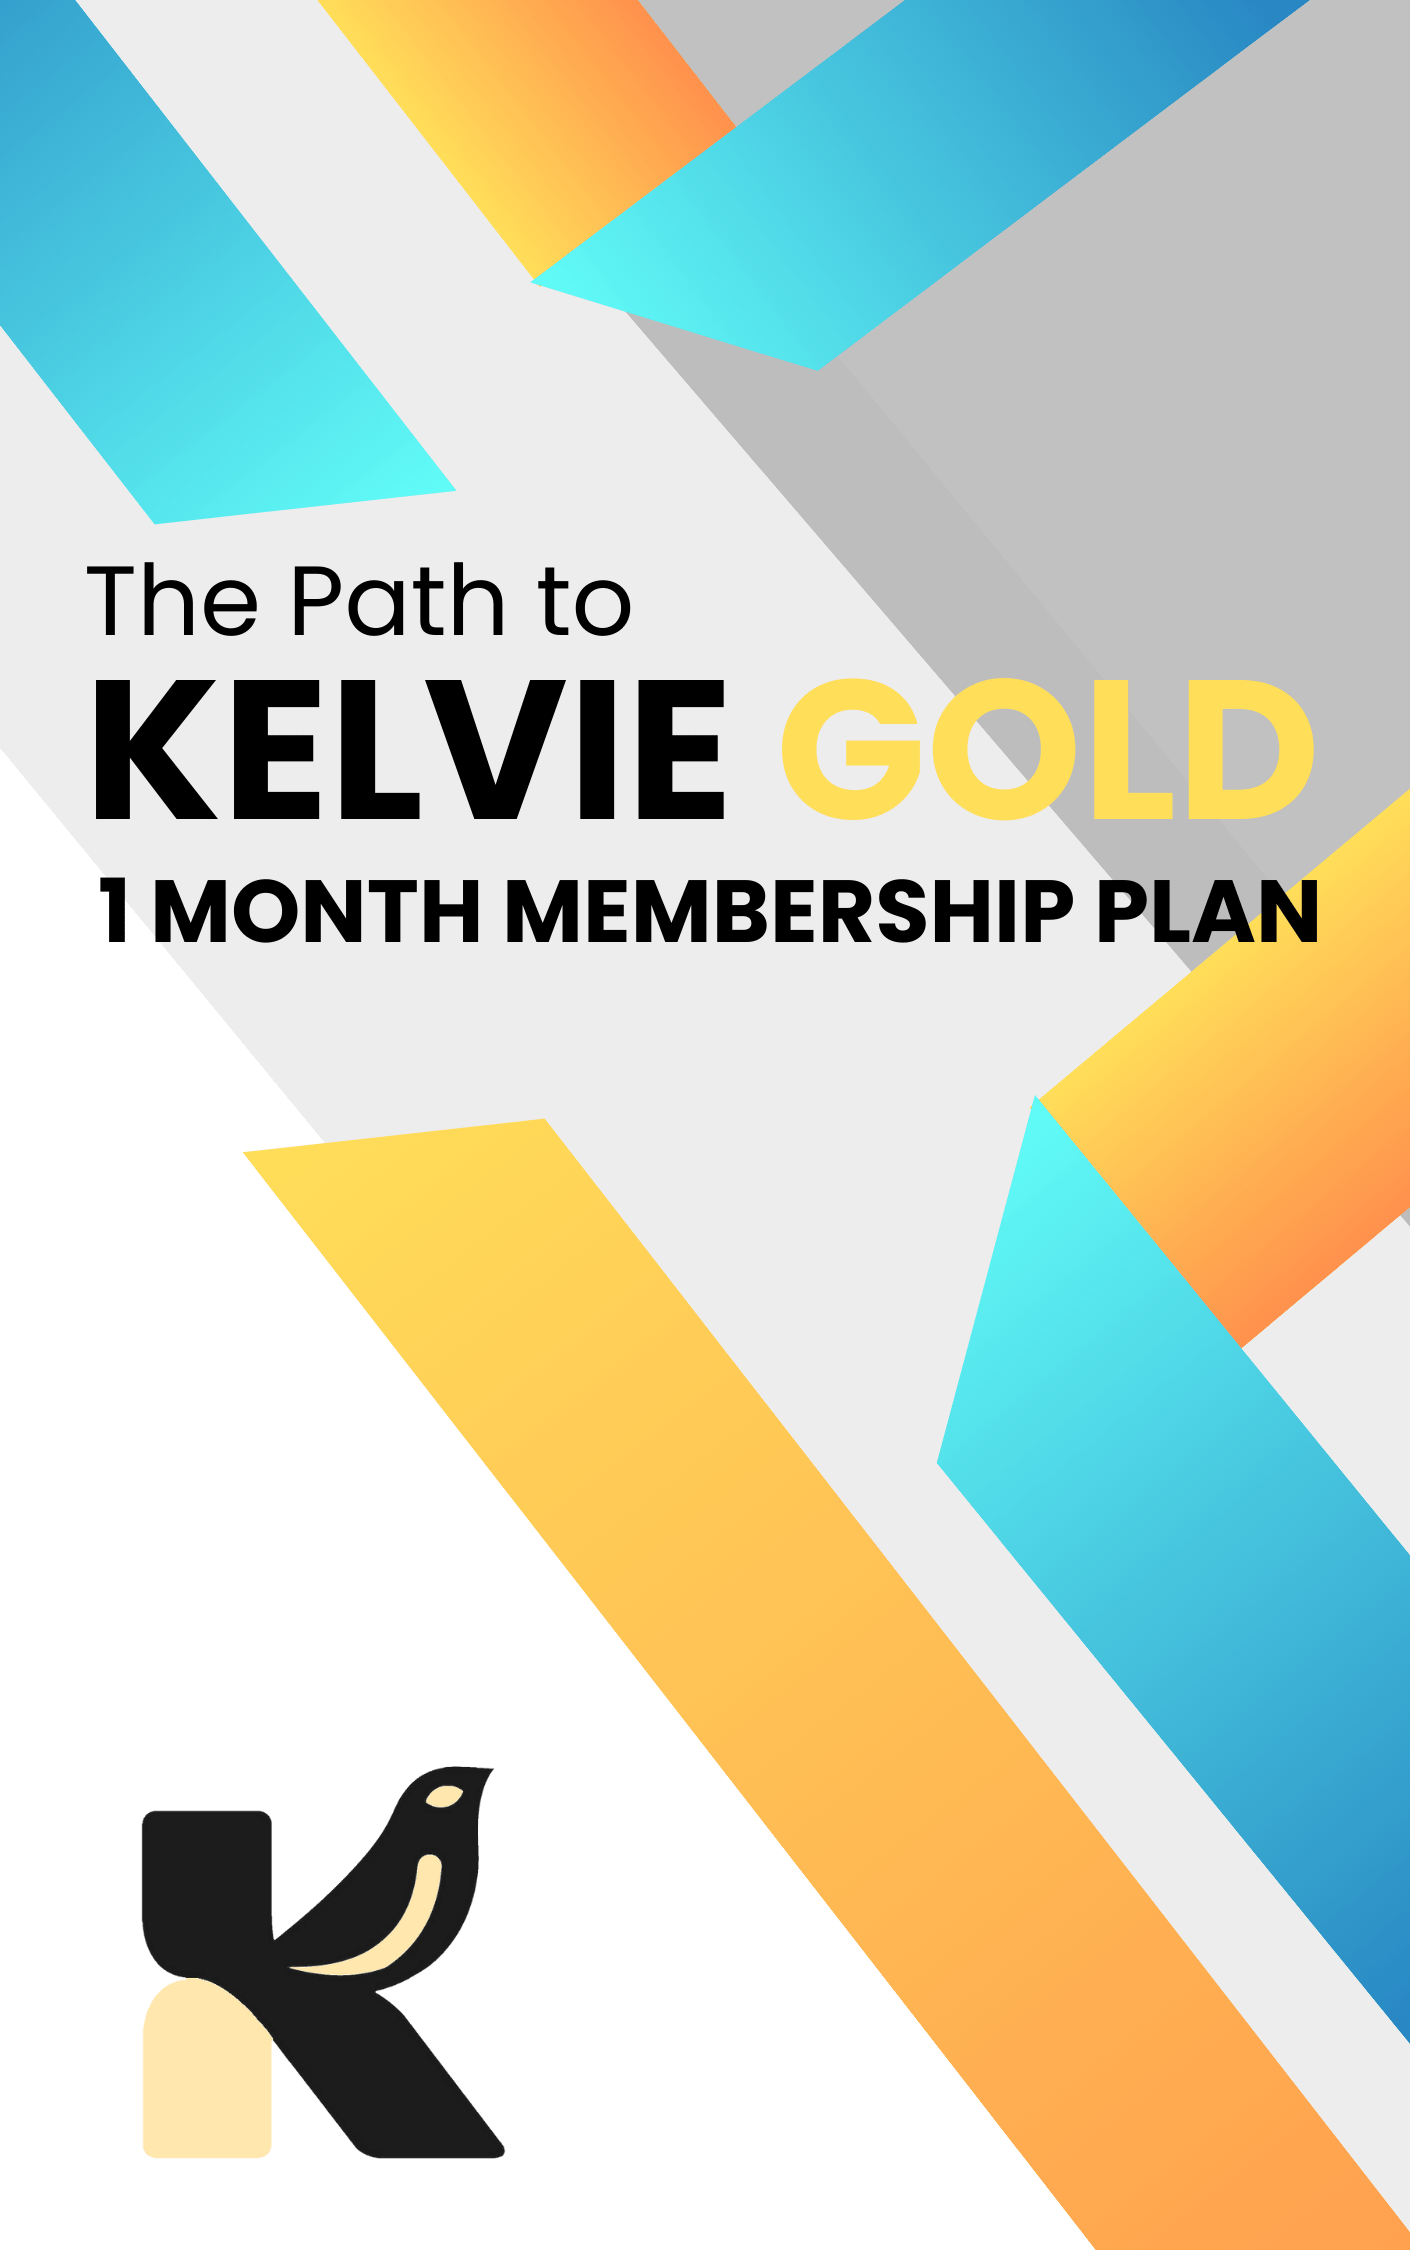 KELVIE GOLD - 1 Month Membership